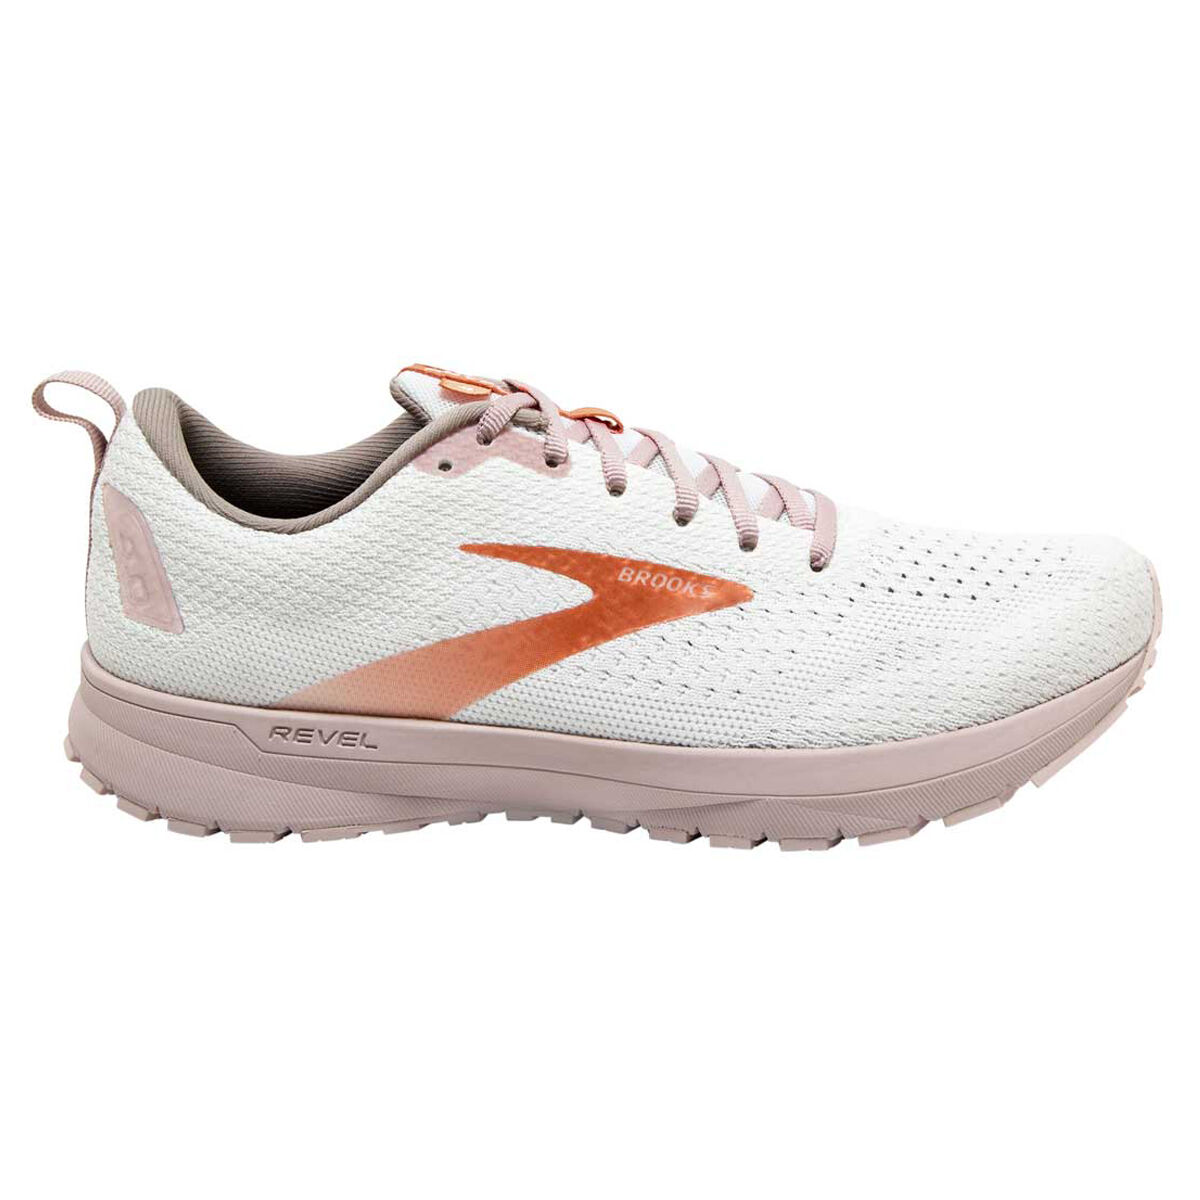 brooks revel women's running shoe